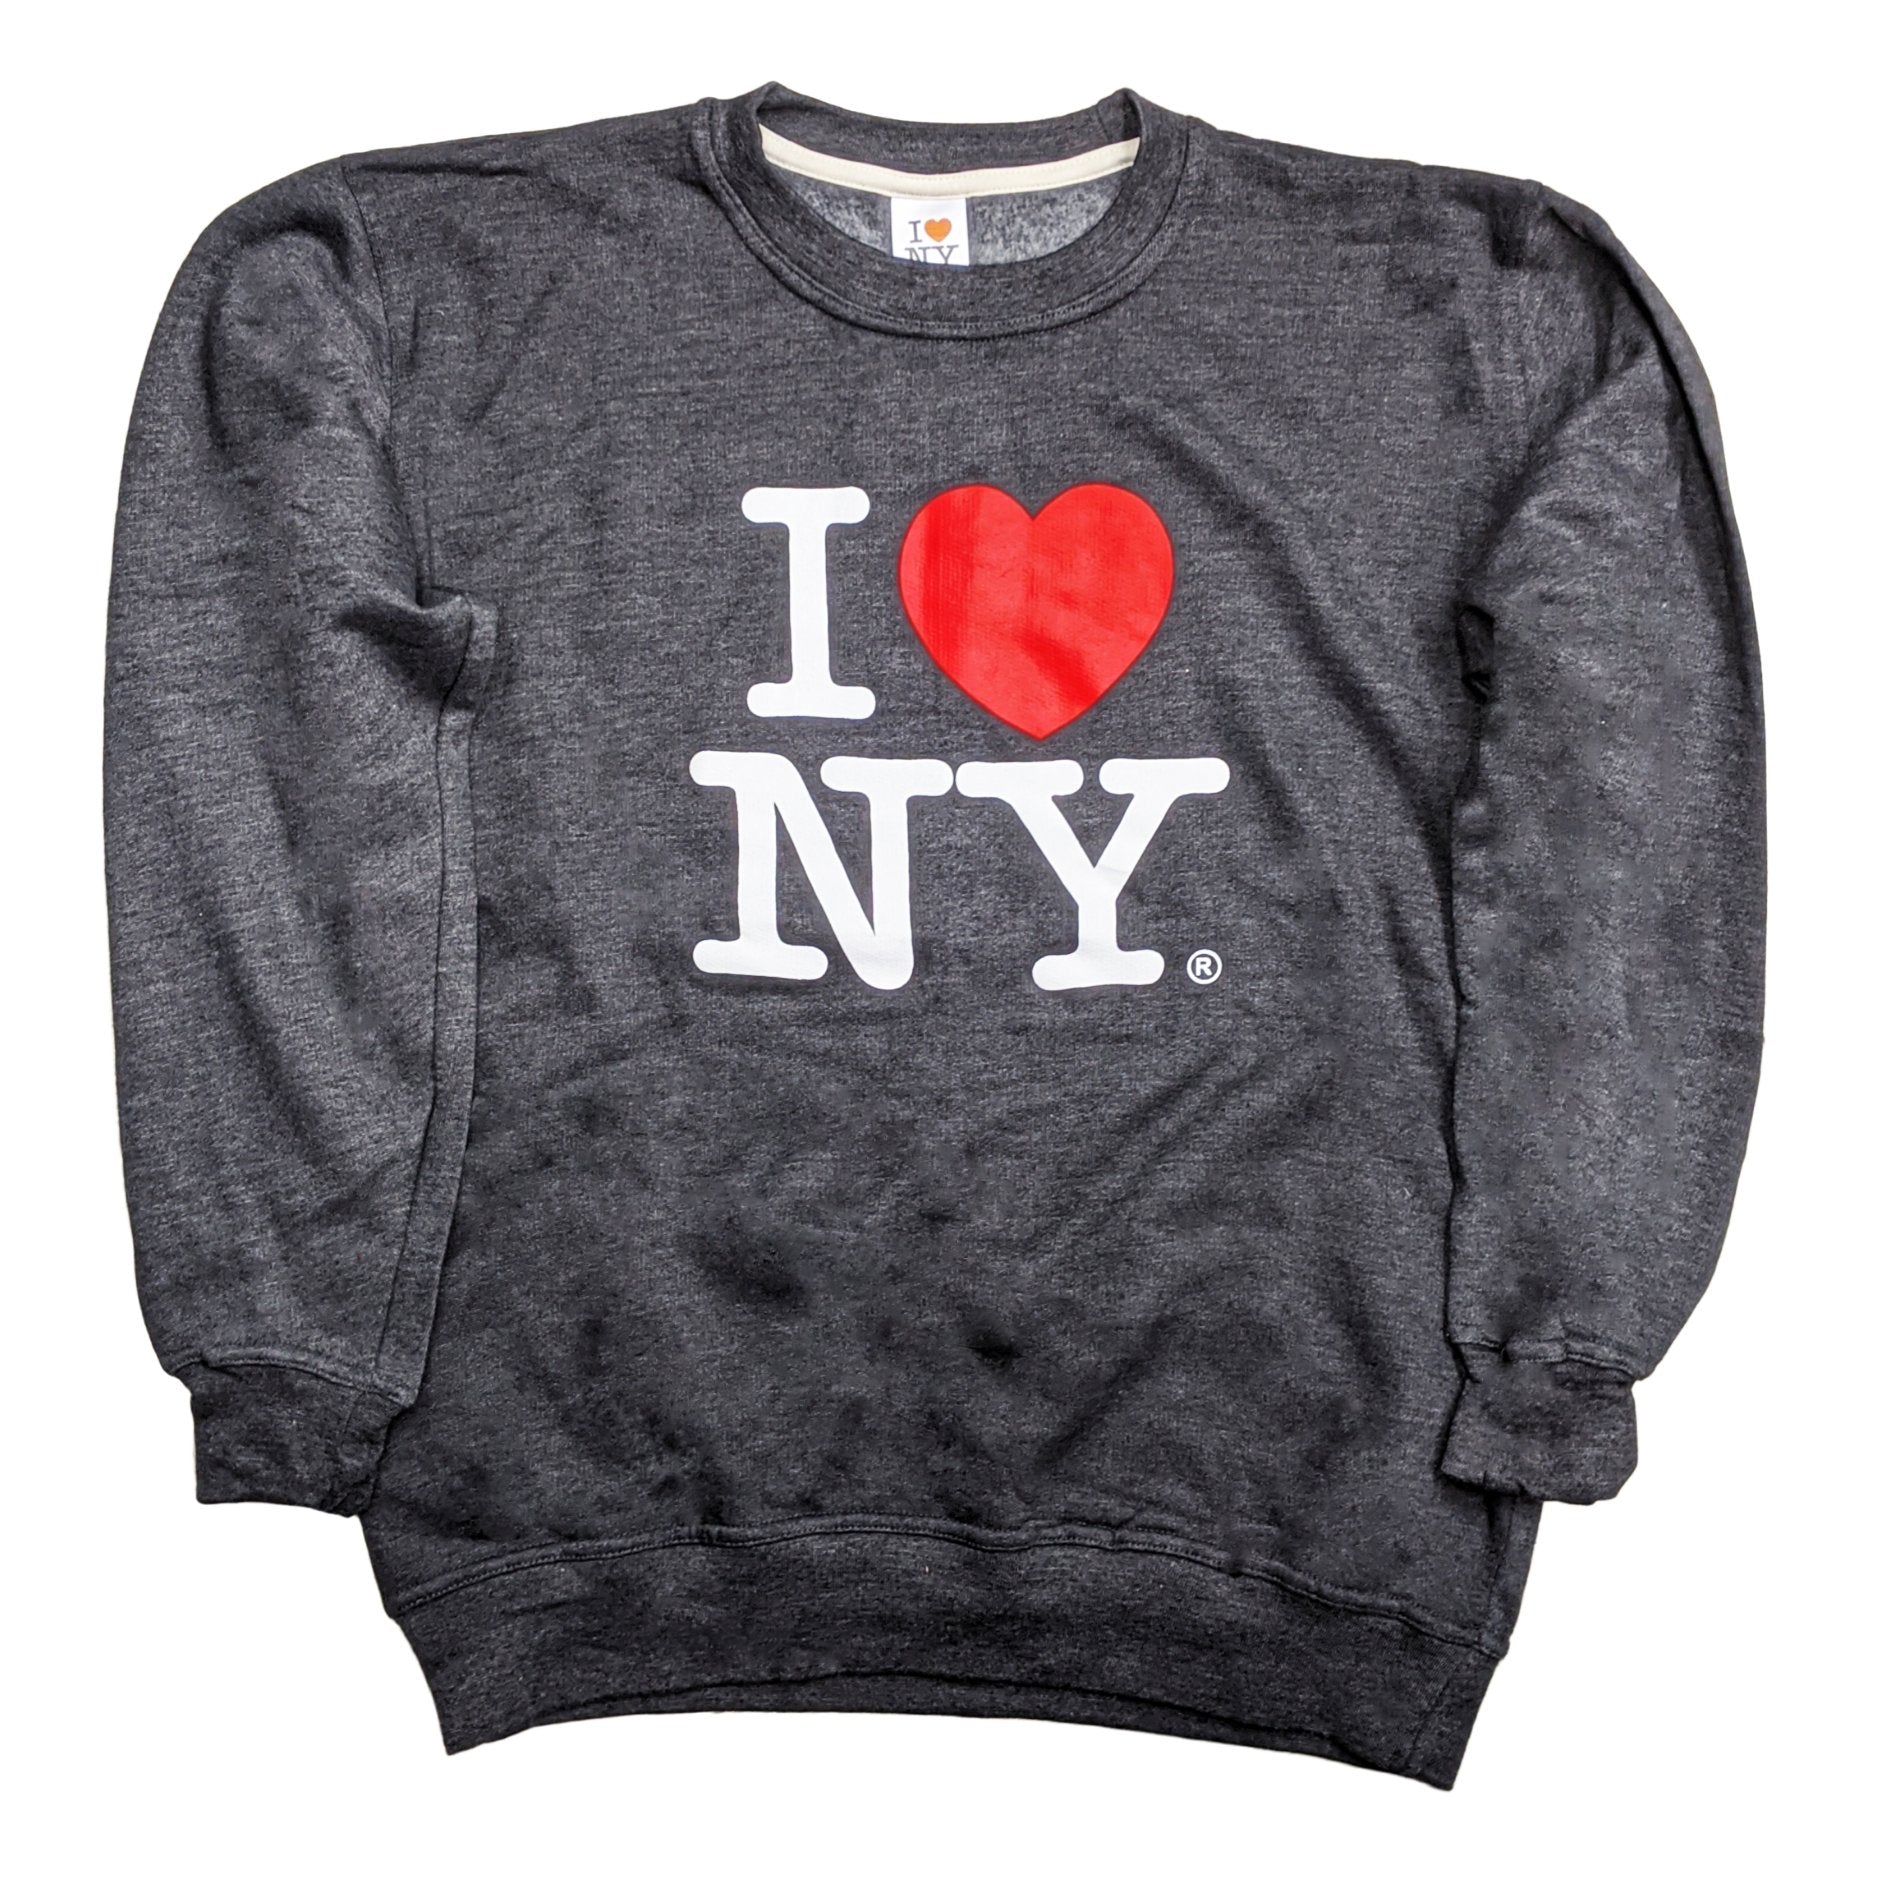 I Love NY Crewneck Sweatshirt Heather Gray Officially Licensed